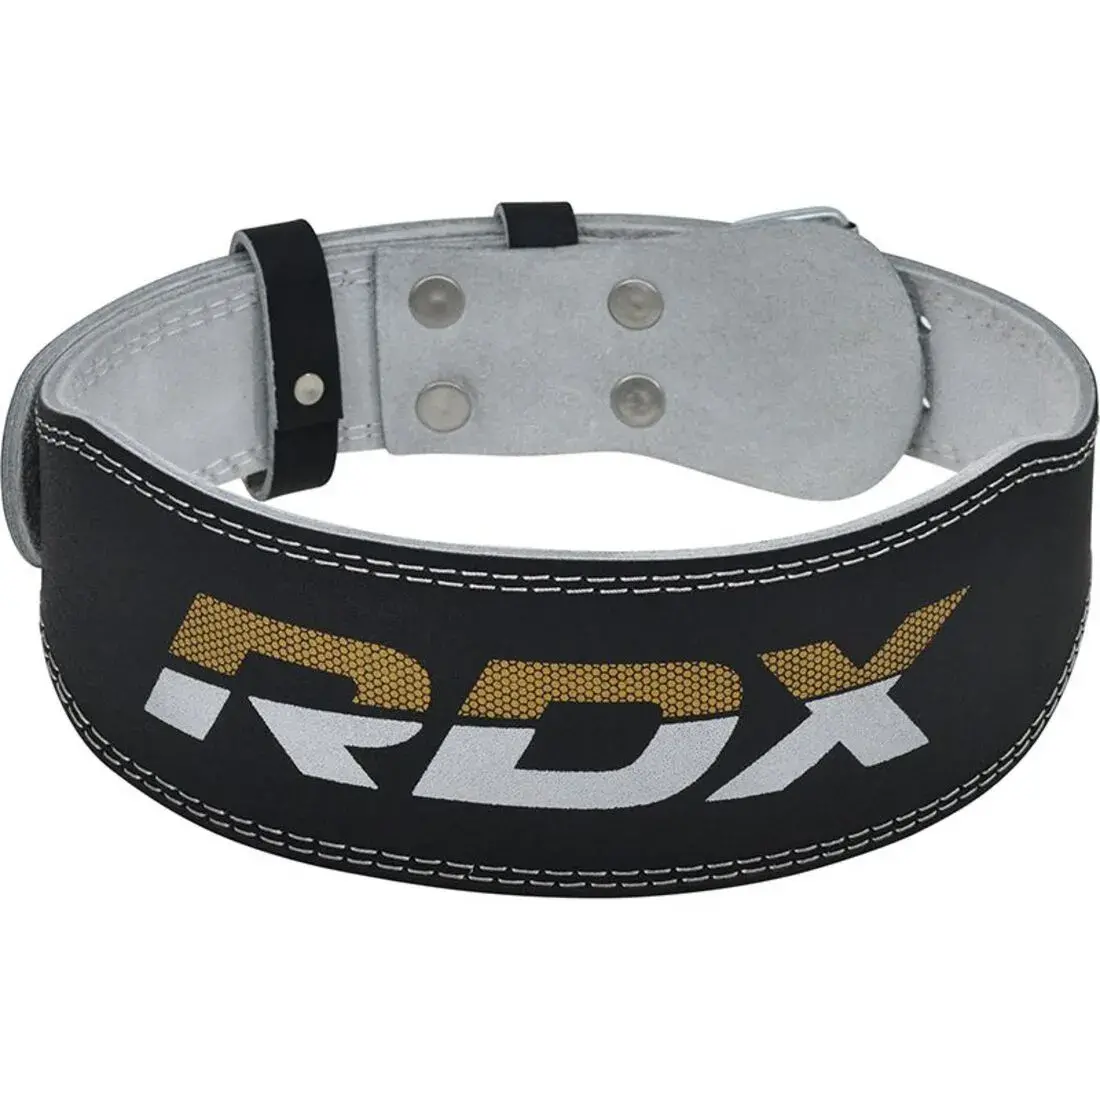 belt rdx leather